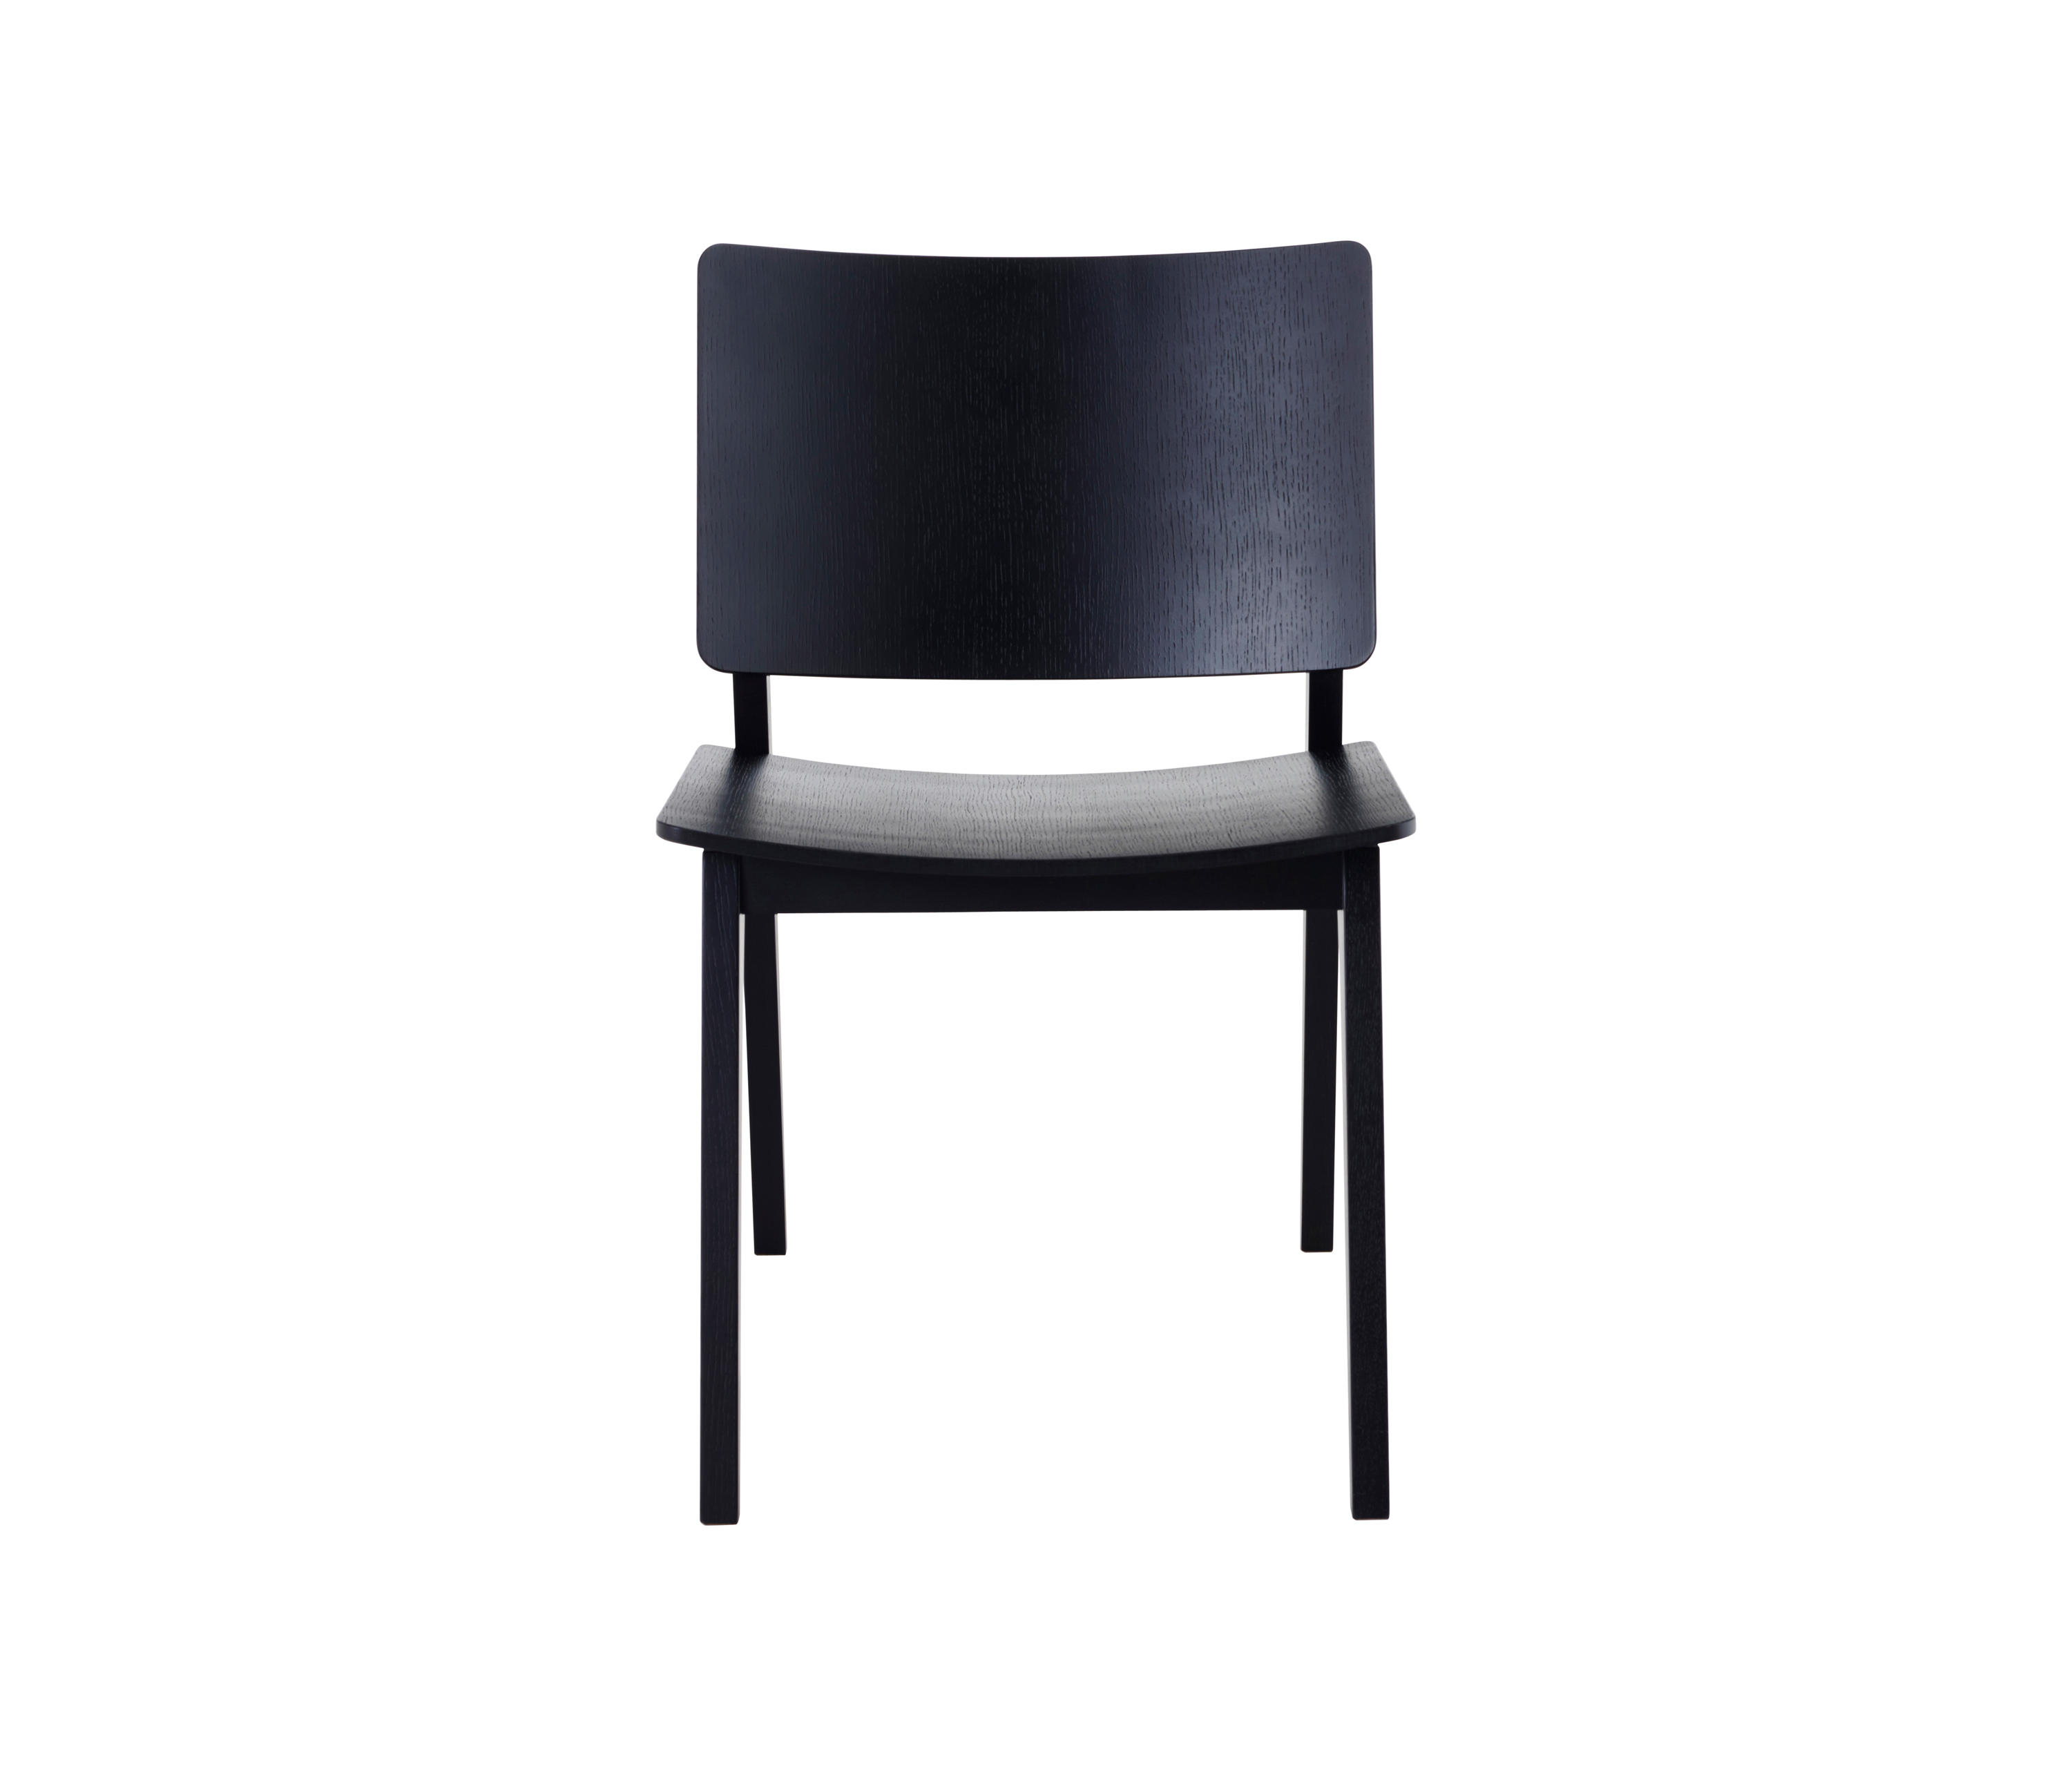 Maui Standard Chair Designer Furniture Architonic